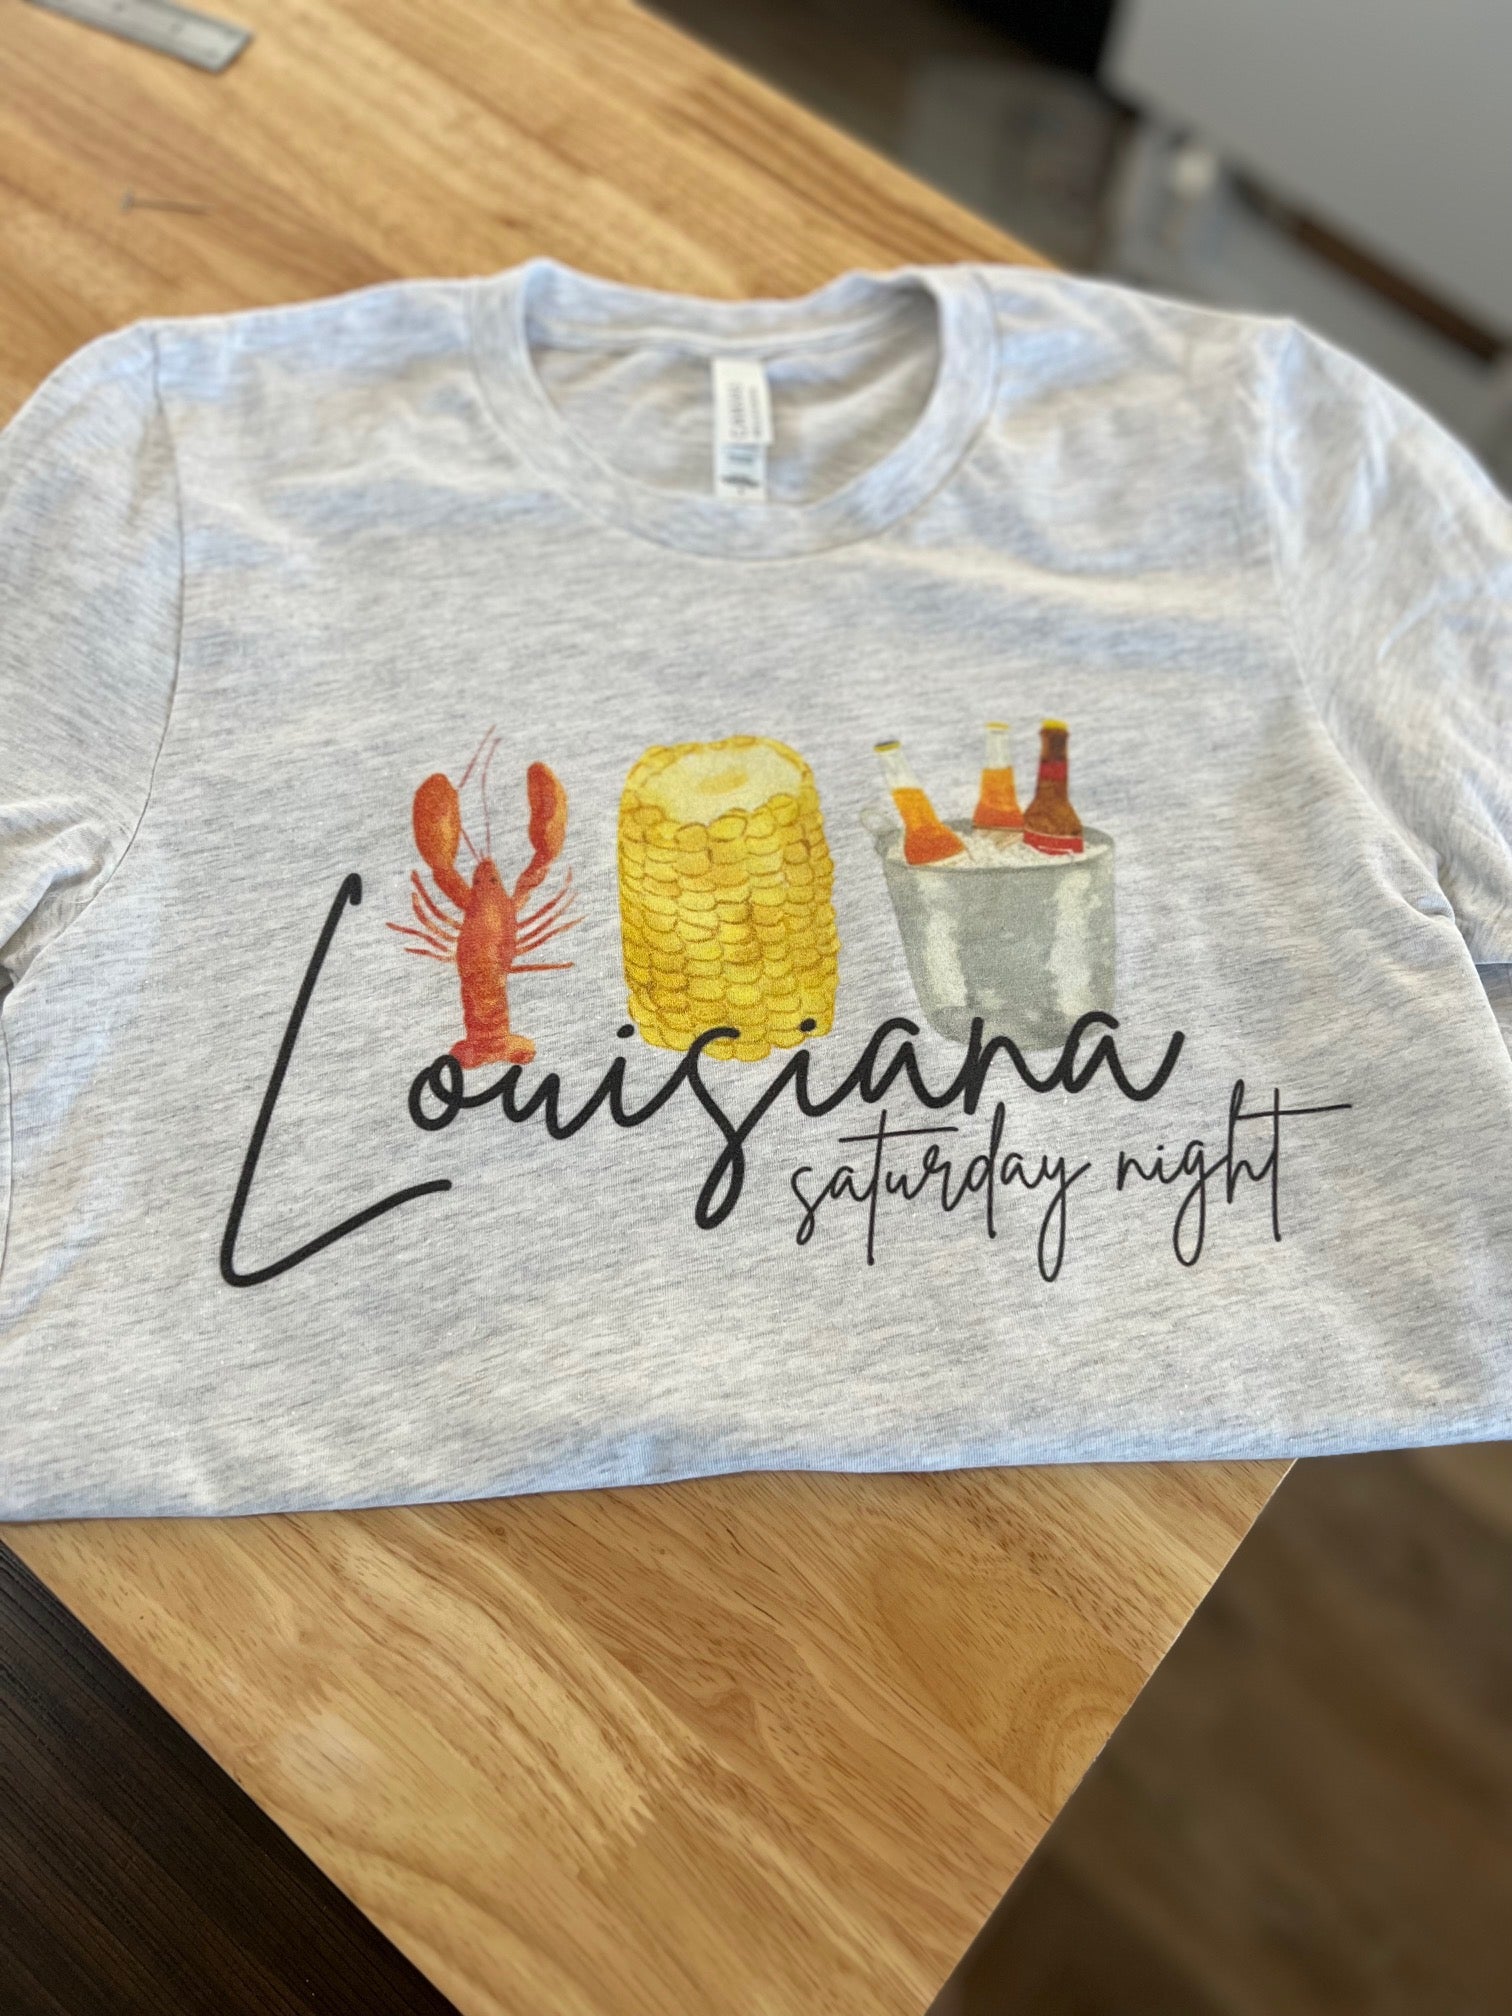 louisiana saturday night t shirt